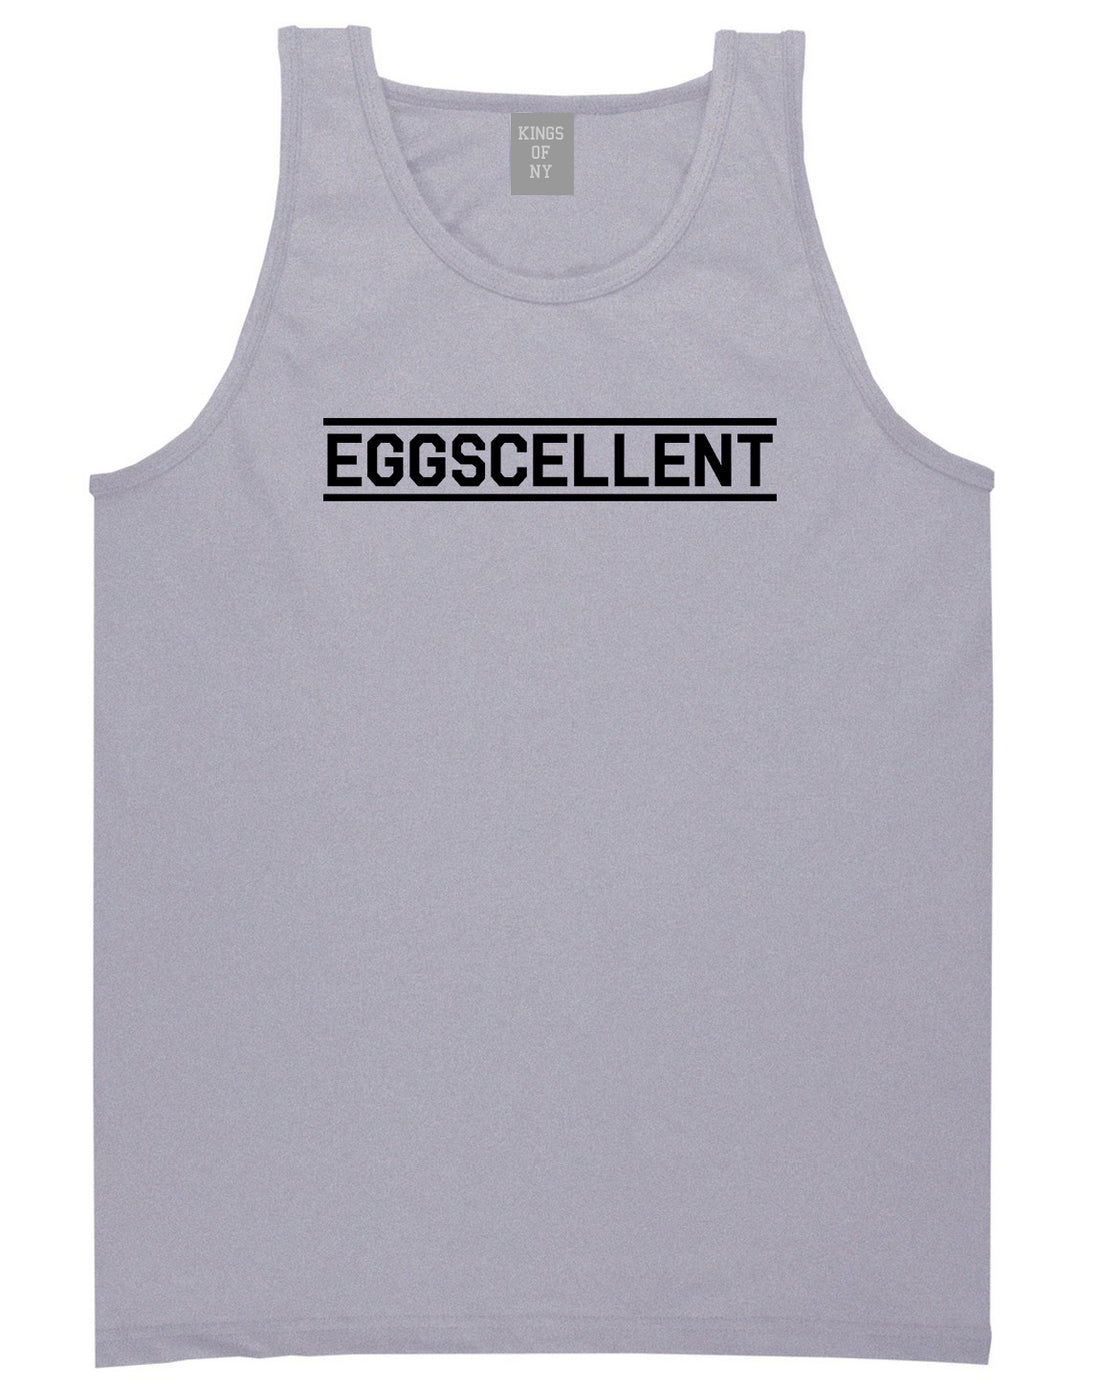 Eggscellent_Funny Mens Grey Tank Top Shirt by Kings Of NY